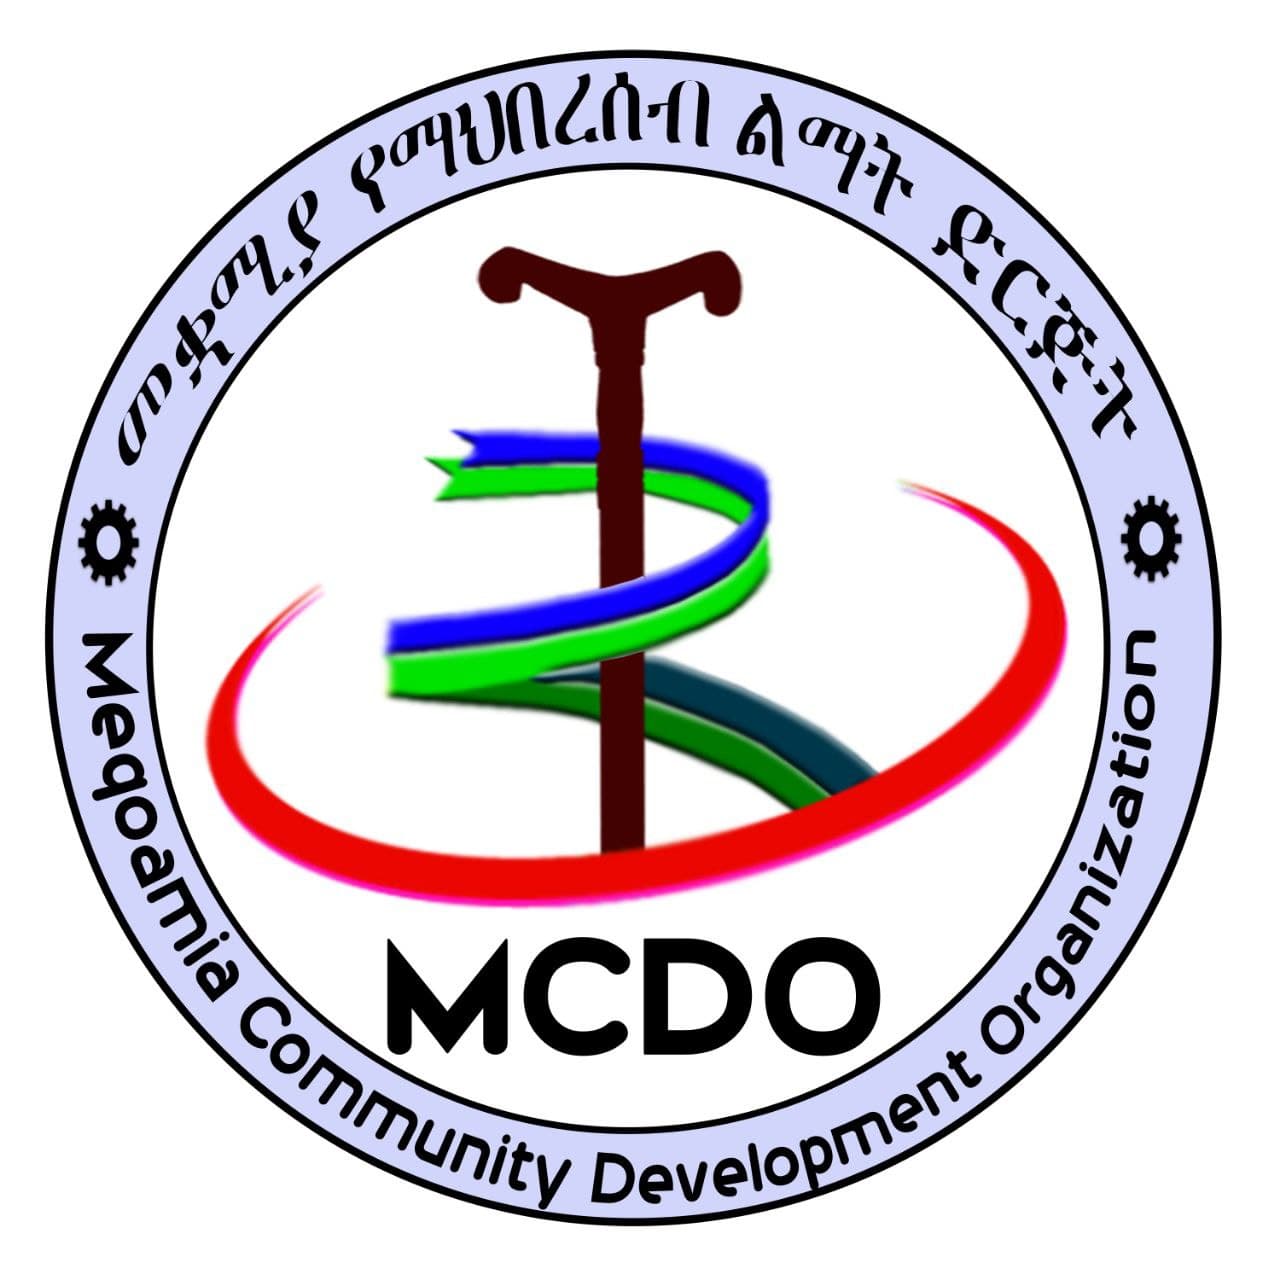 Meqoamia Community Development Organization